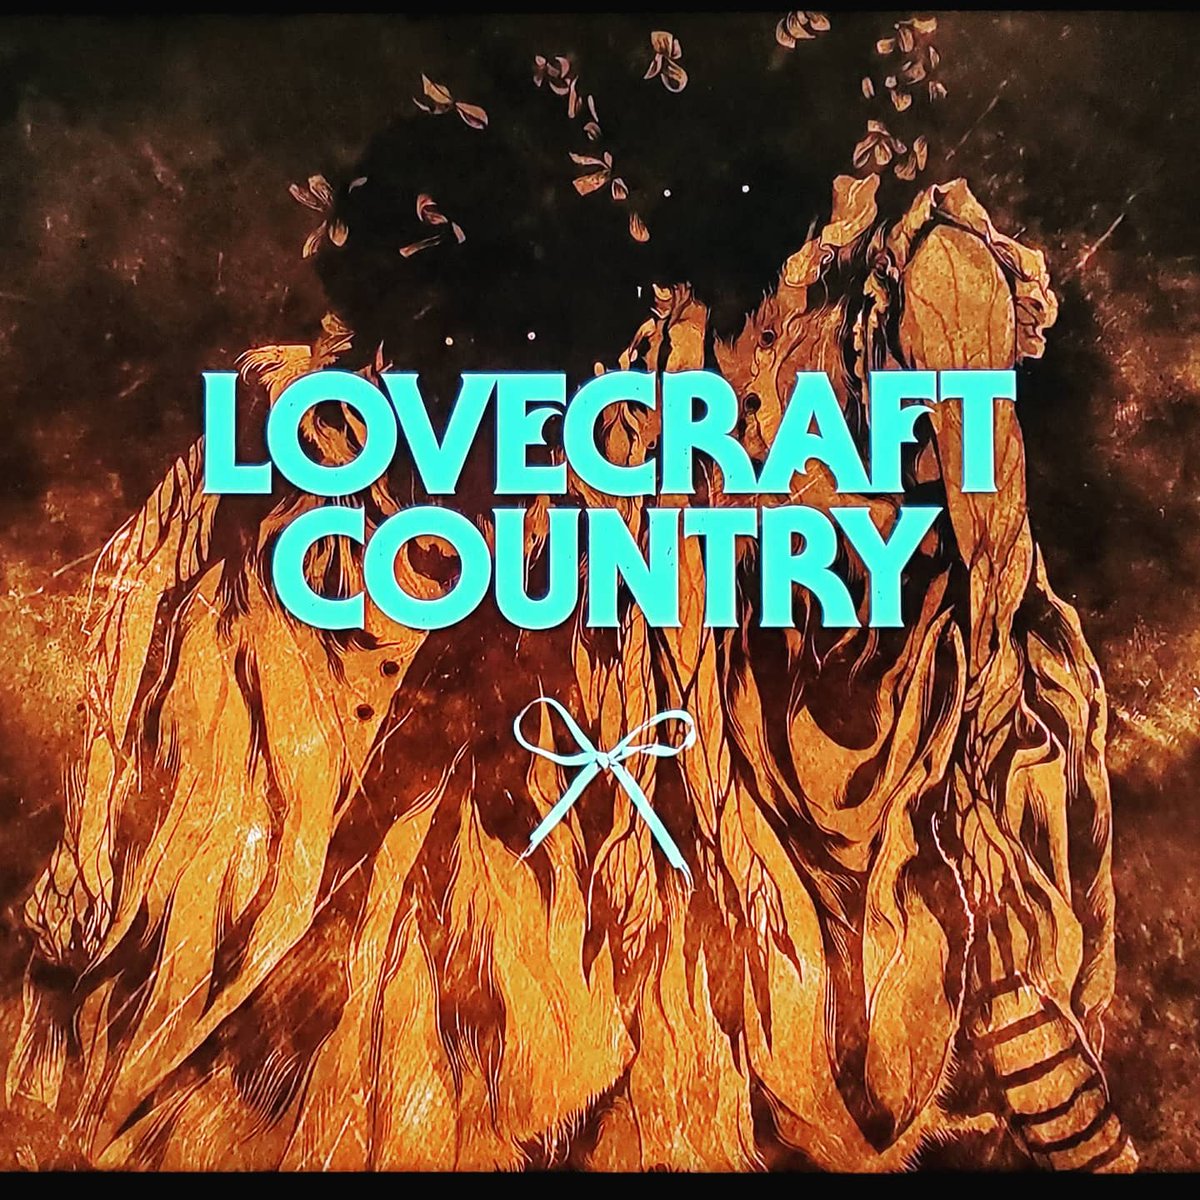 Listen now to Lovecraft Country Ep. 8!
anchor.fm/kaiwan-pittman…
#KriticalBlueReviews #lovecraft #hplovecraft #lovecraftcountry  #horror #thriller #blackexcellence #tvseries  #mishagreen #monkeypawproductions #jordanpeele #warnerbrostelevision #jjabrams #tv #art #adventure #action